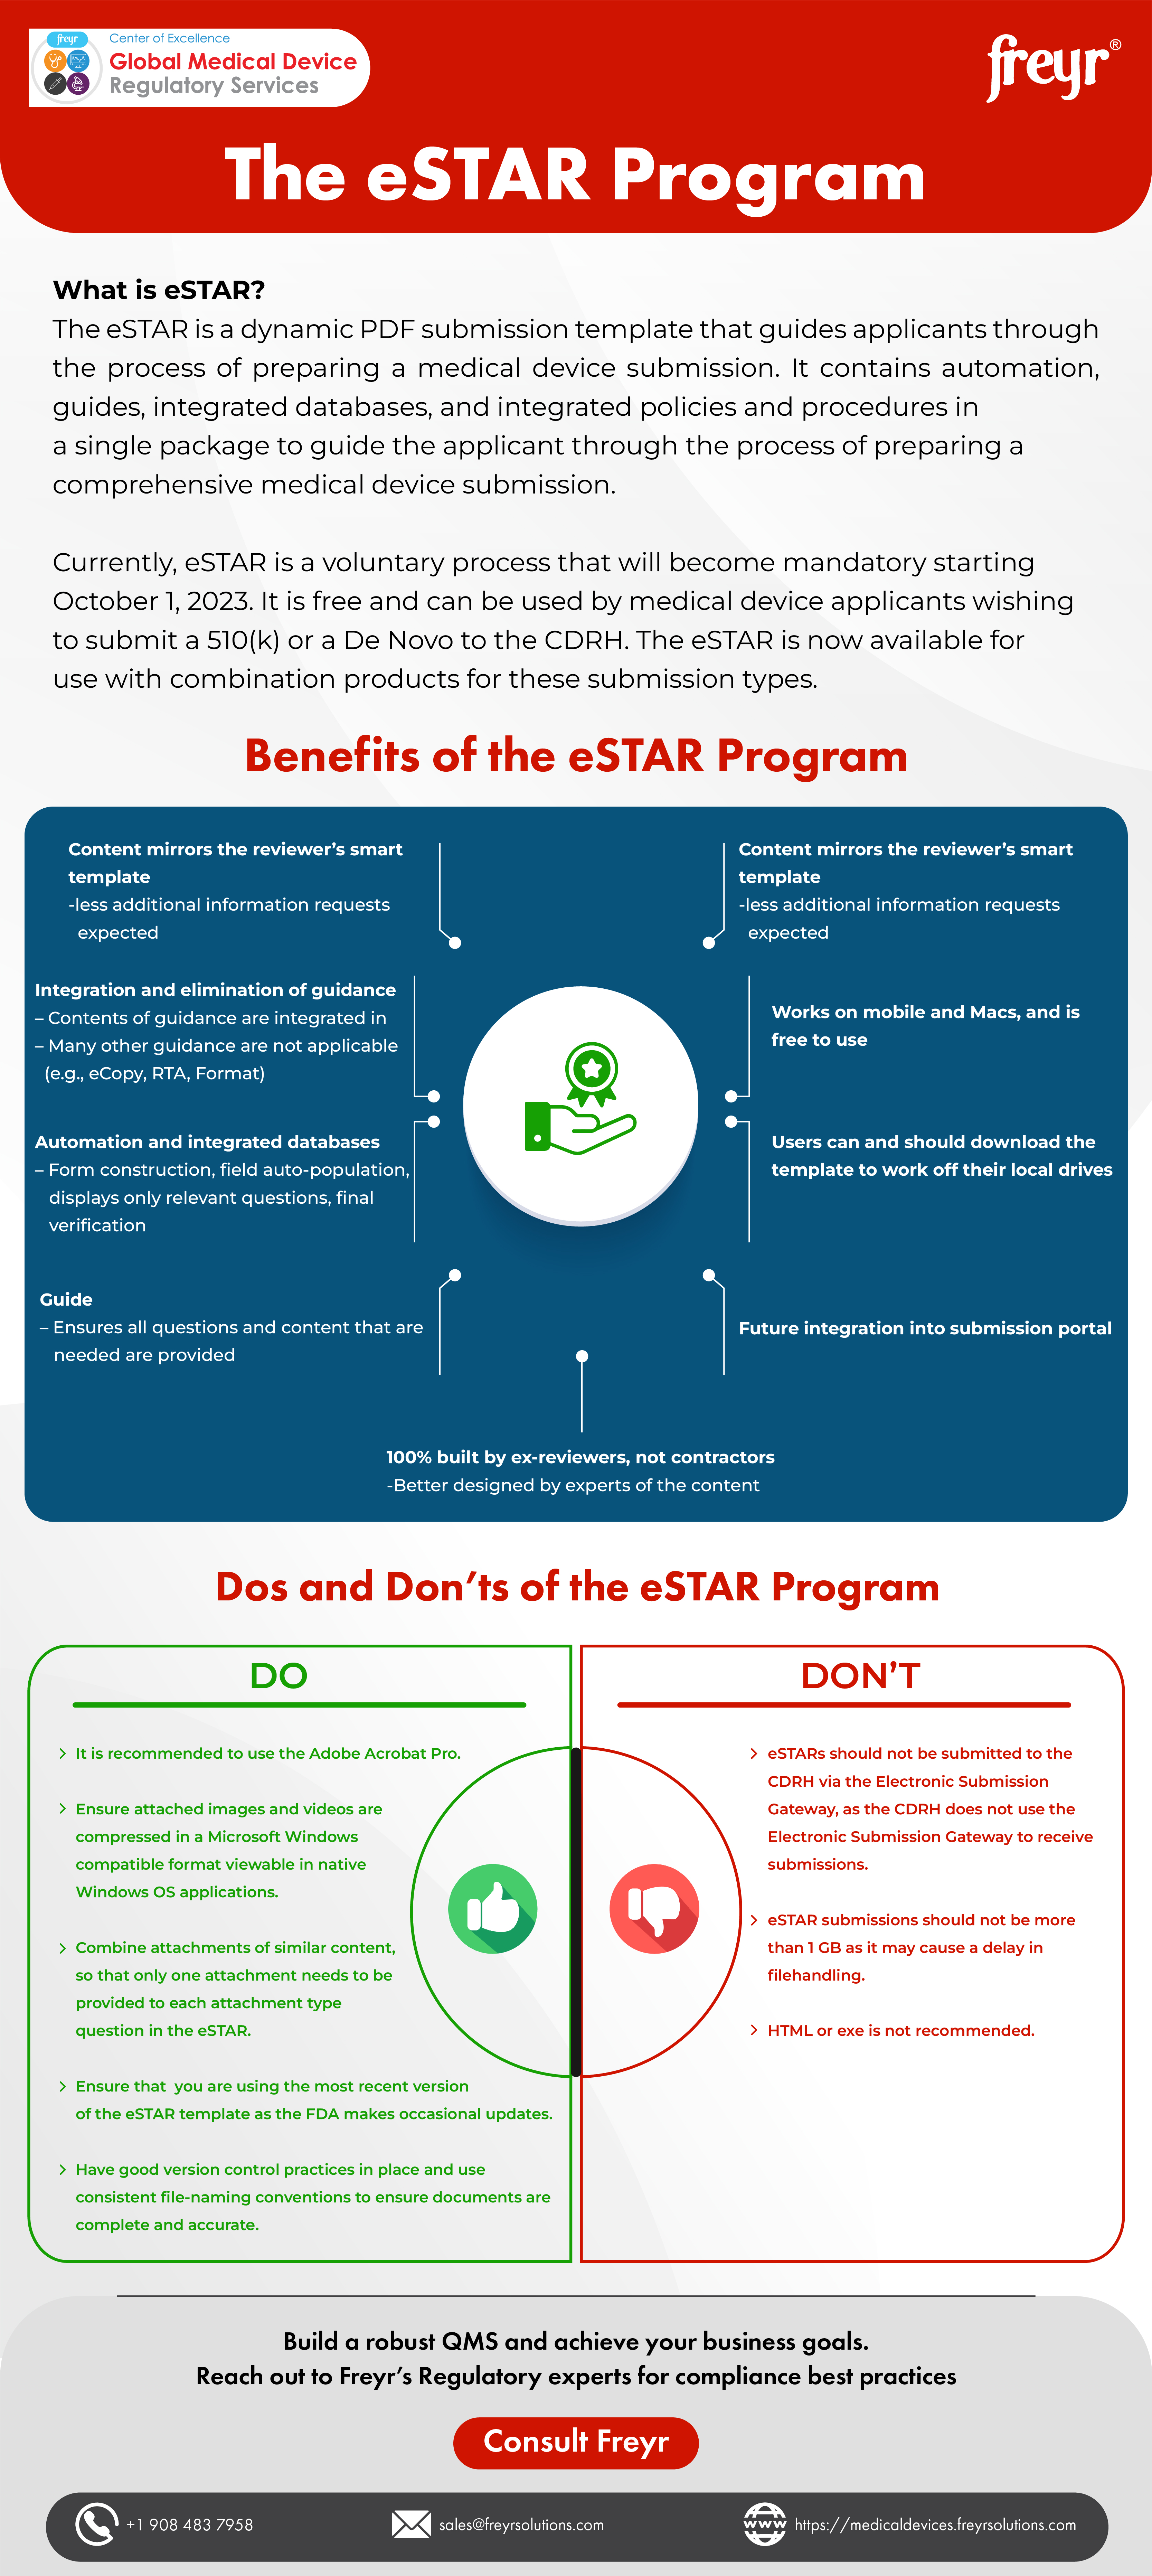 The eStar Program